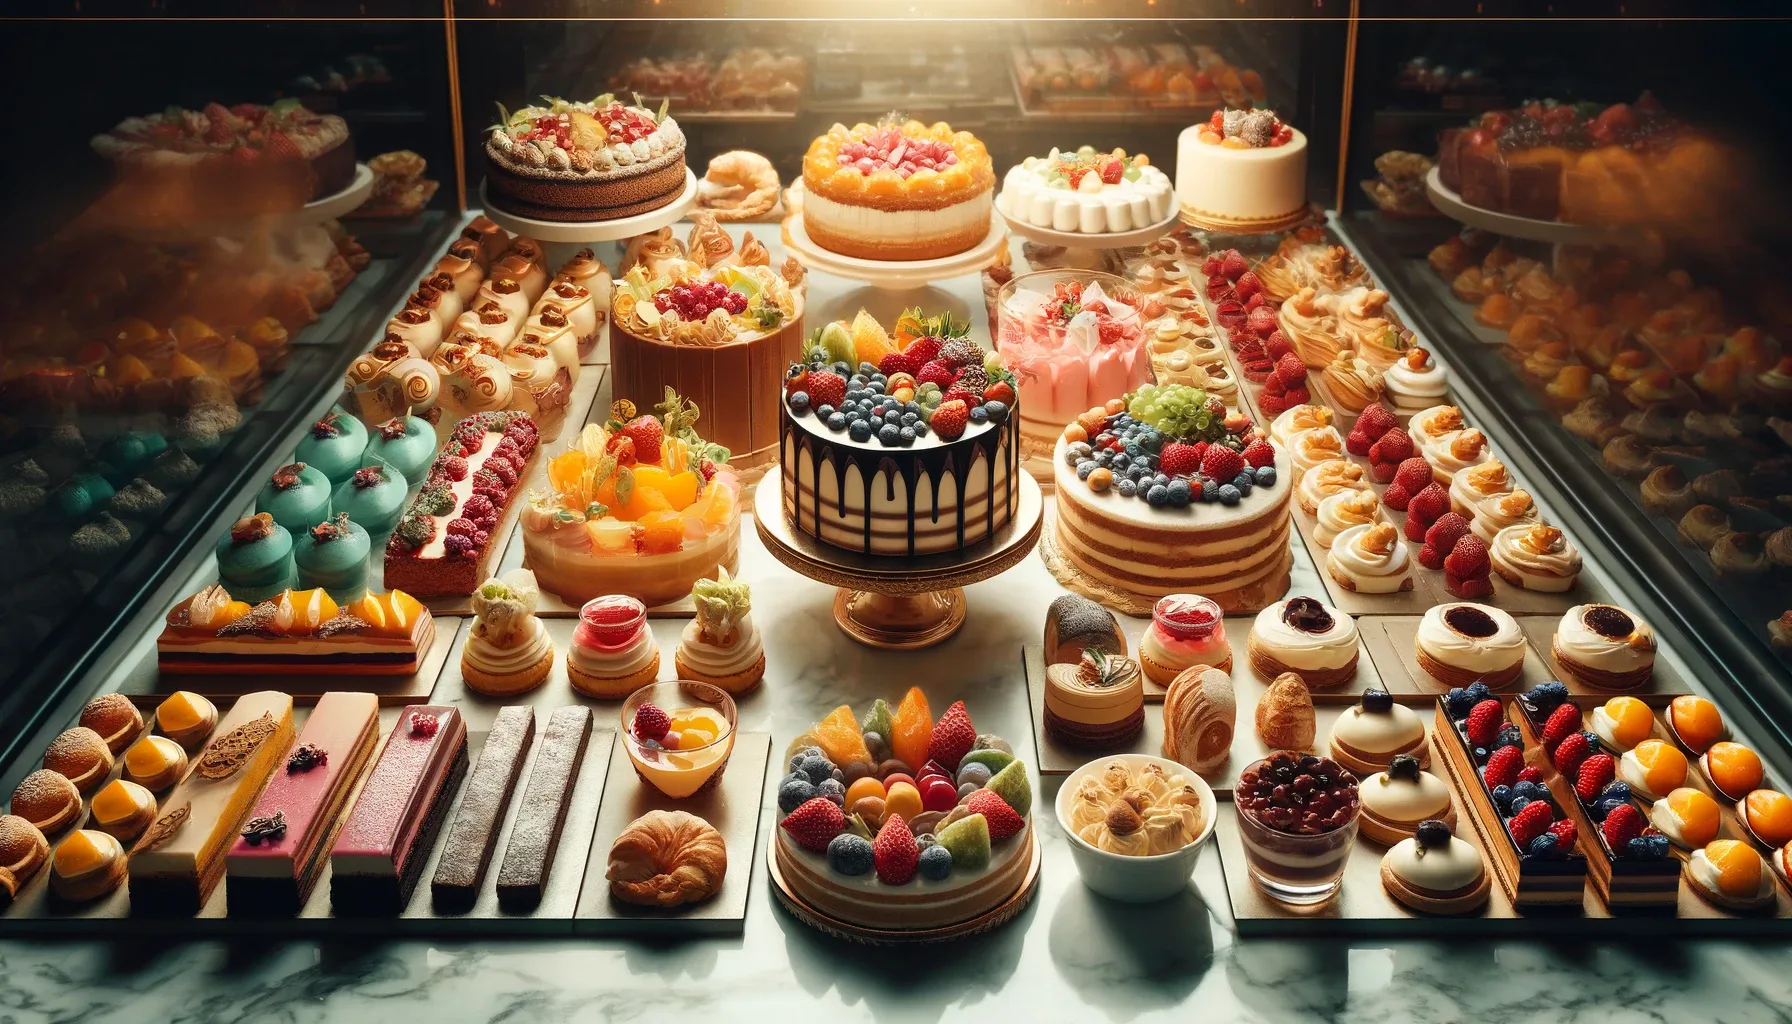 A display case full of beautiful plant-based, vegan dessert pastries